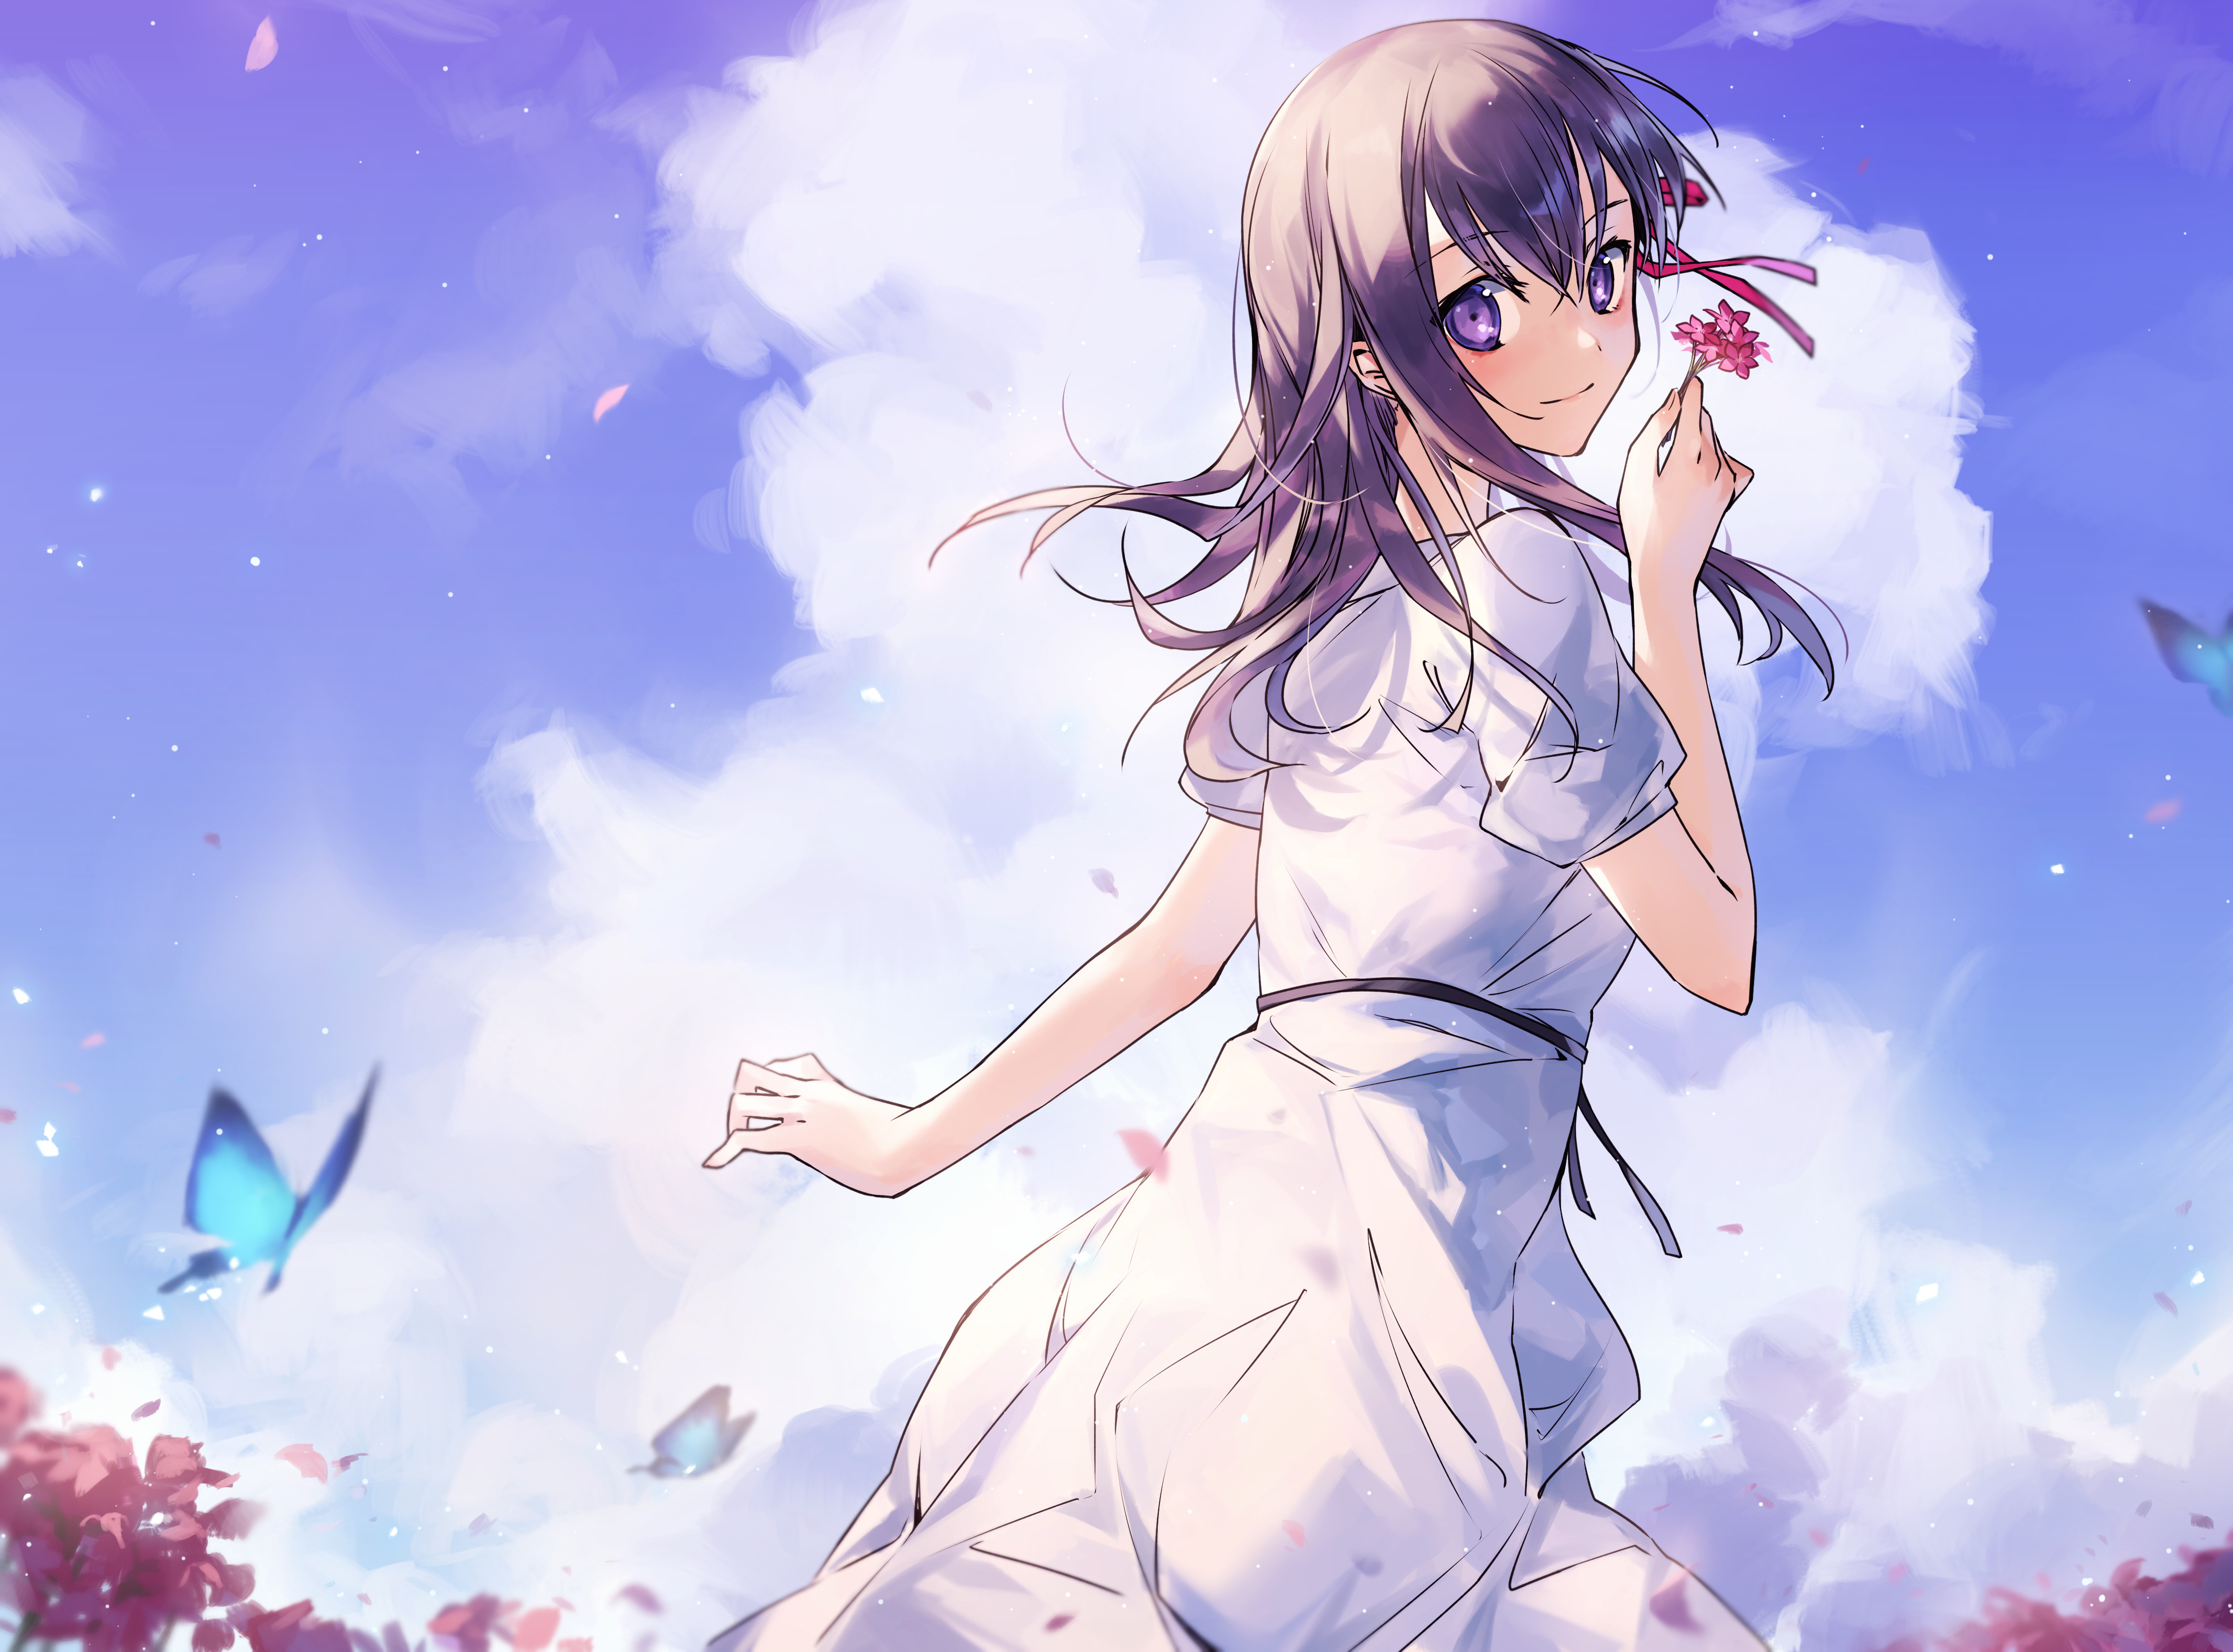 Descarga gratis la imagen Animado, Sakura Matou, Fate/stay Night Película: Heaven's Feel, Serie Del Destino en el escritorio de tu PC